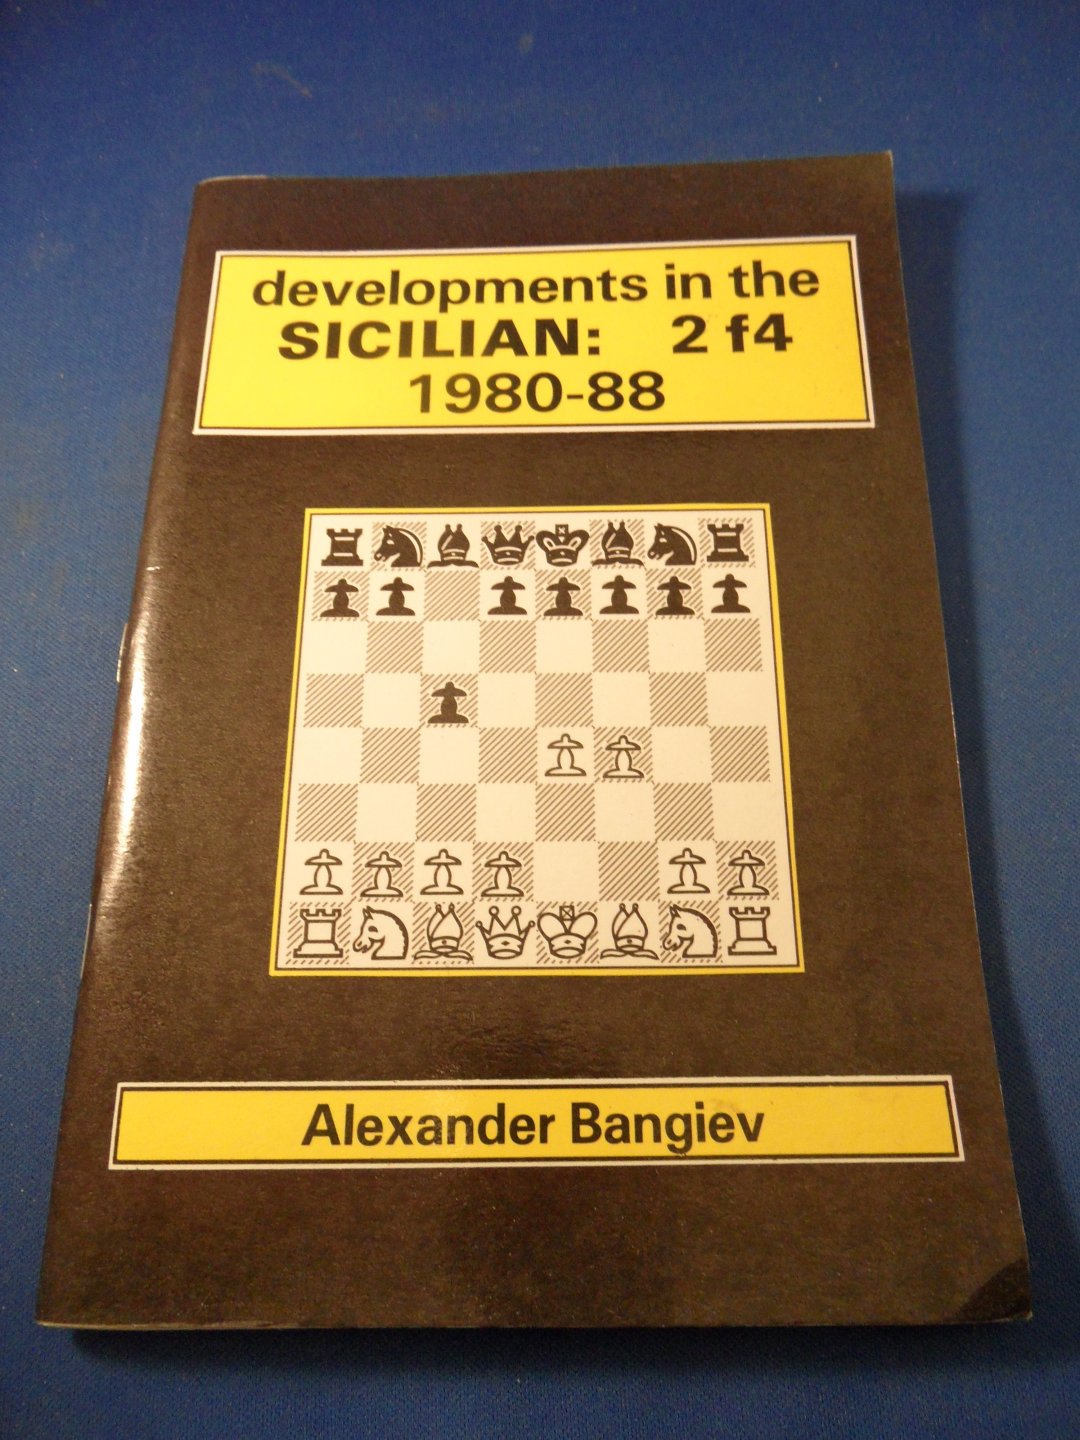 Bangiev, Alexander - Developments in the Sicilian: 2f4 1980-88